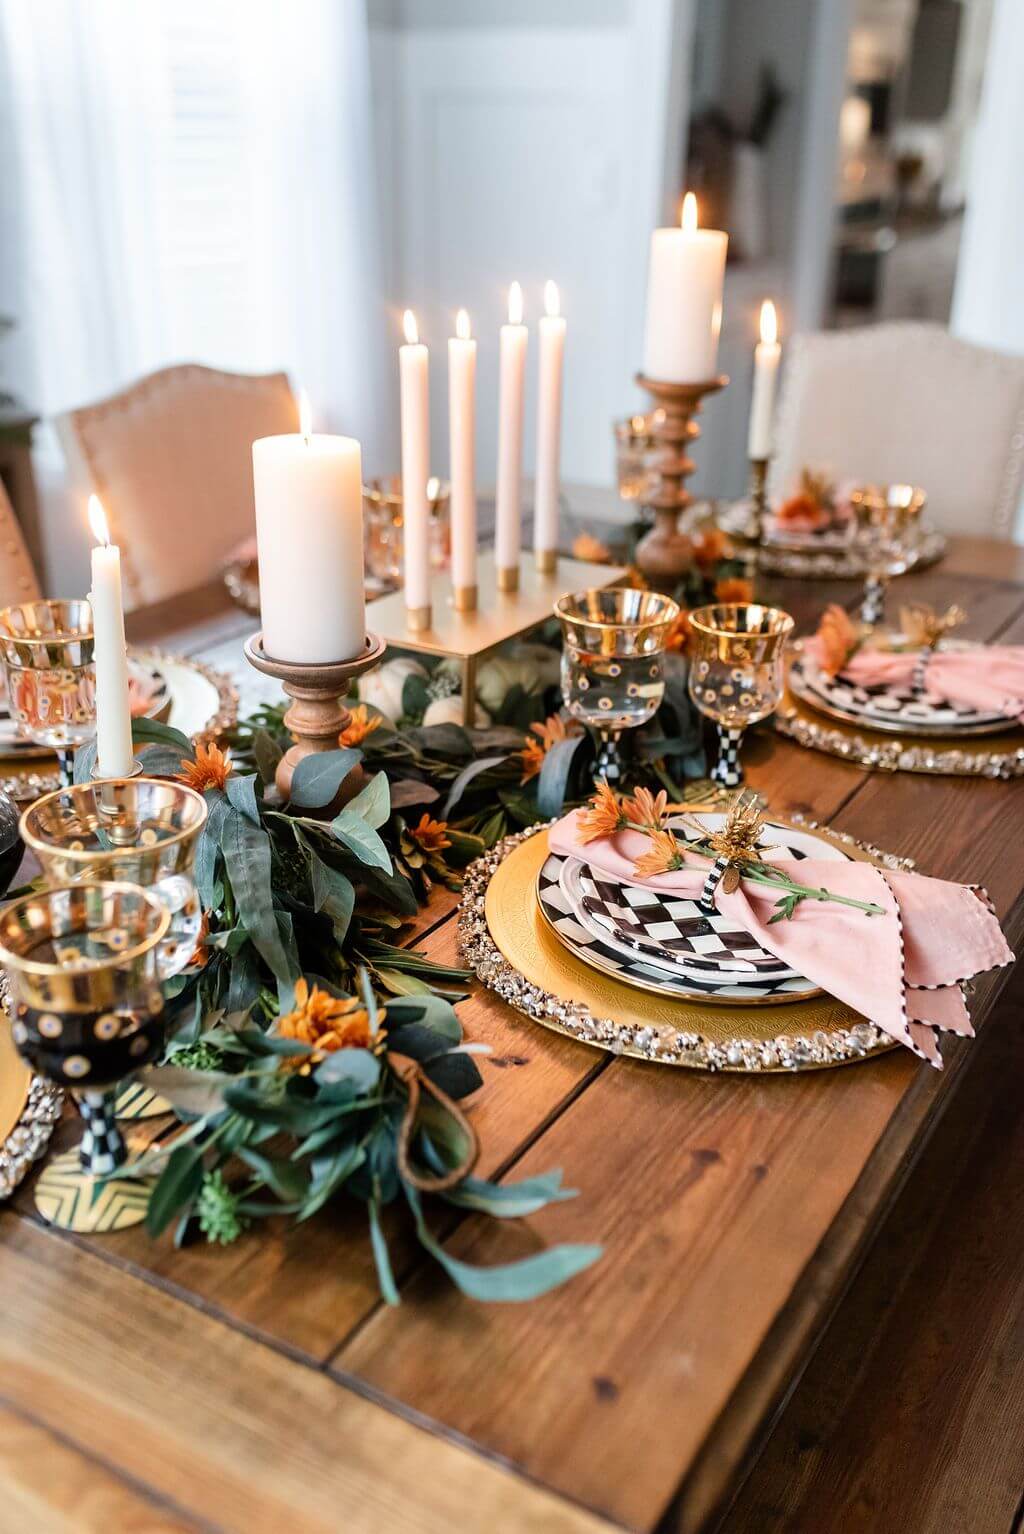 Candleholders for thanksgiving dinner decoration ideas